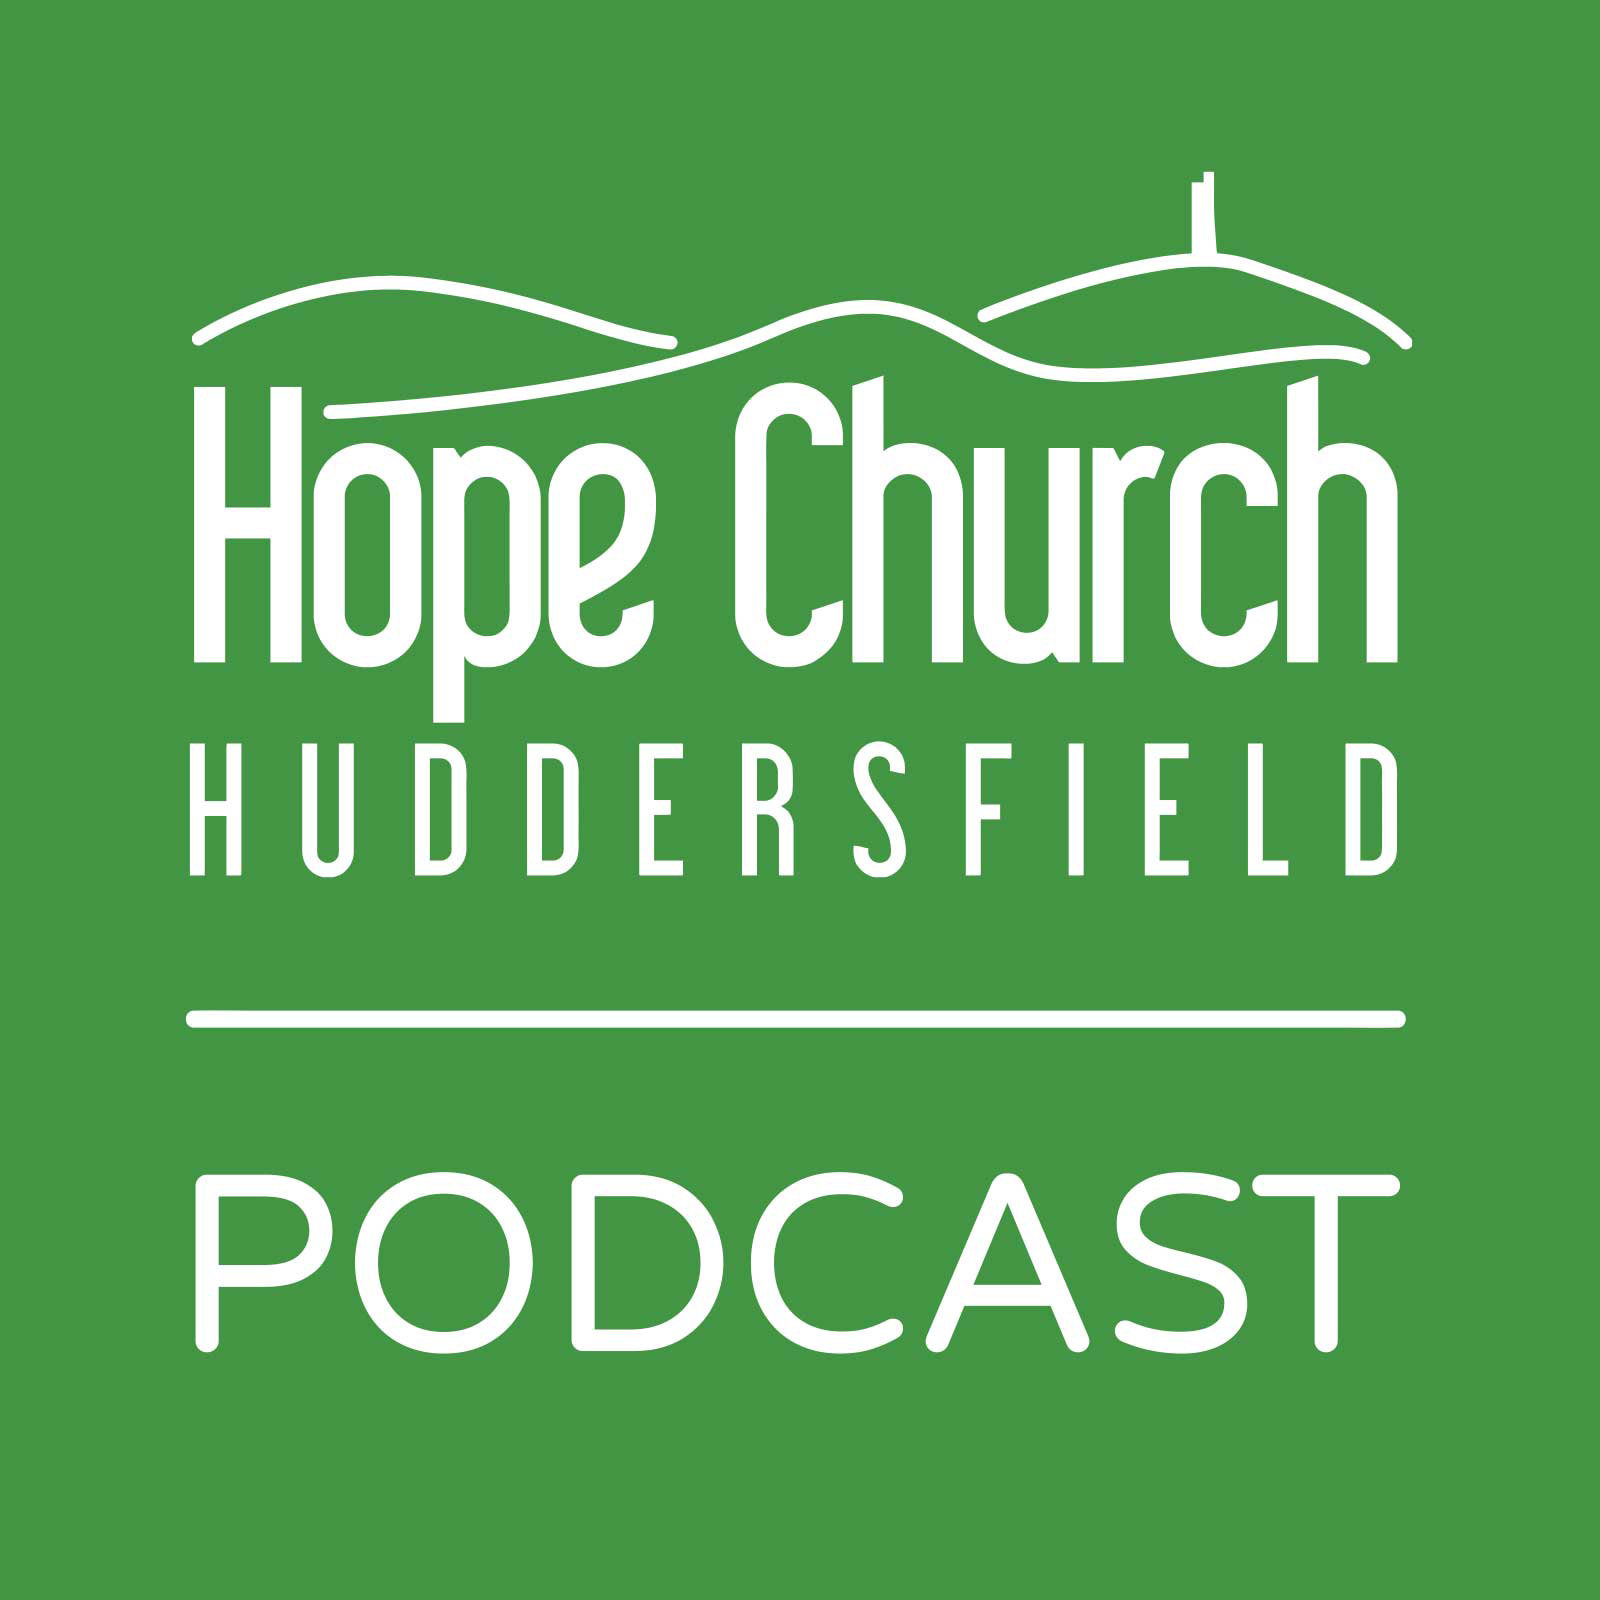 Hope Church Huddersfield